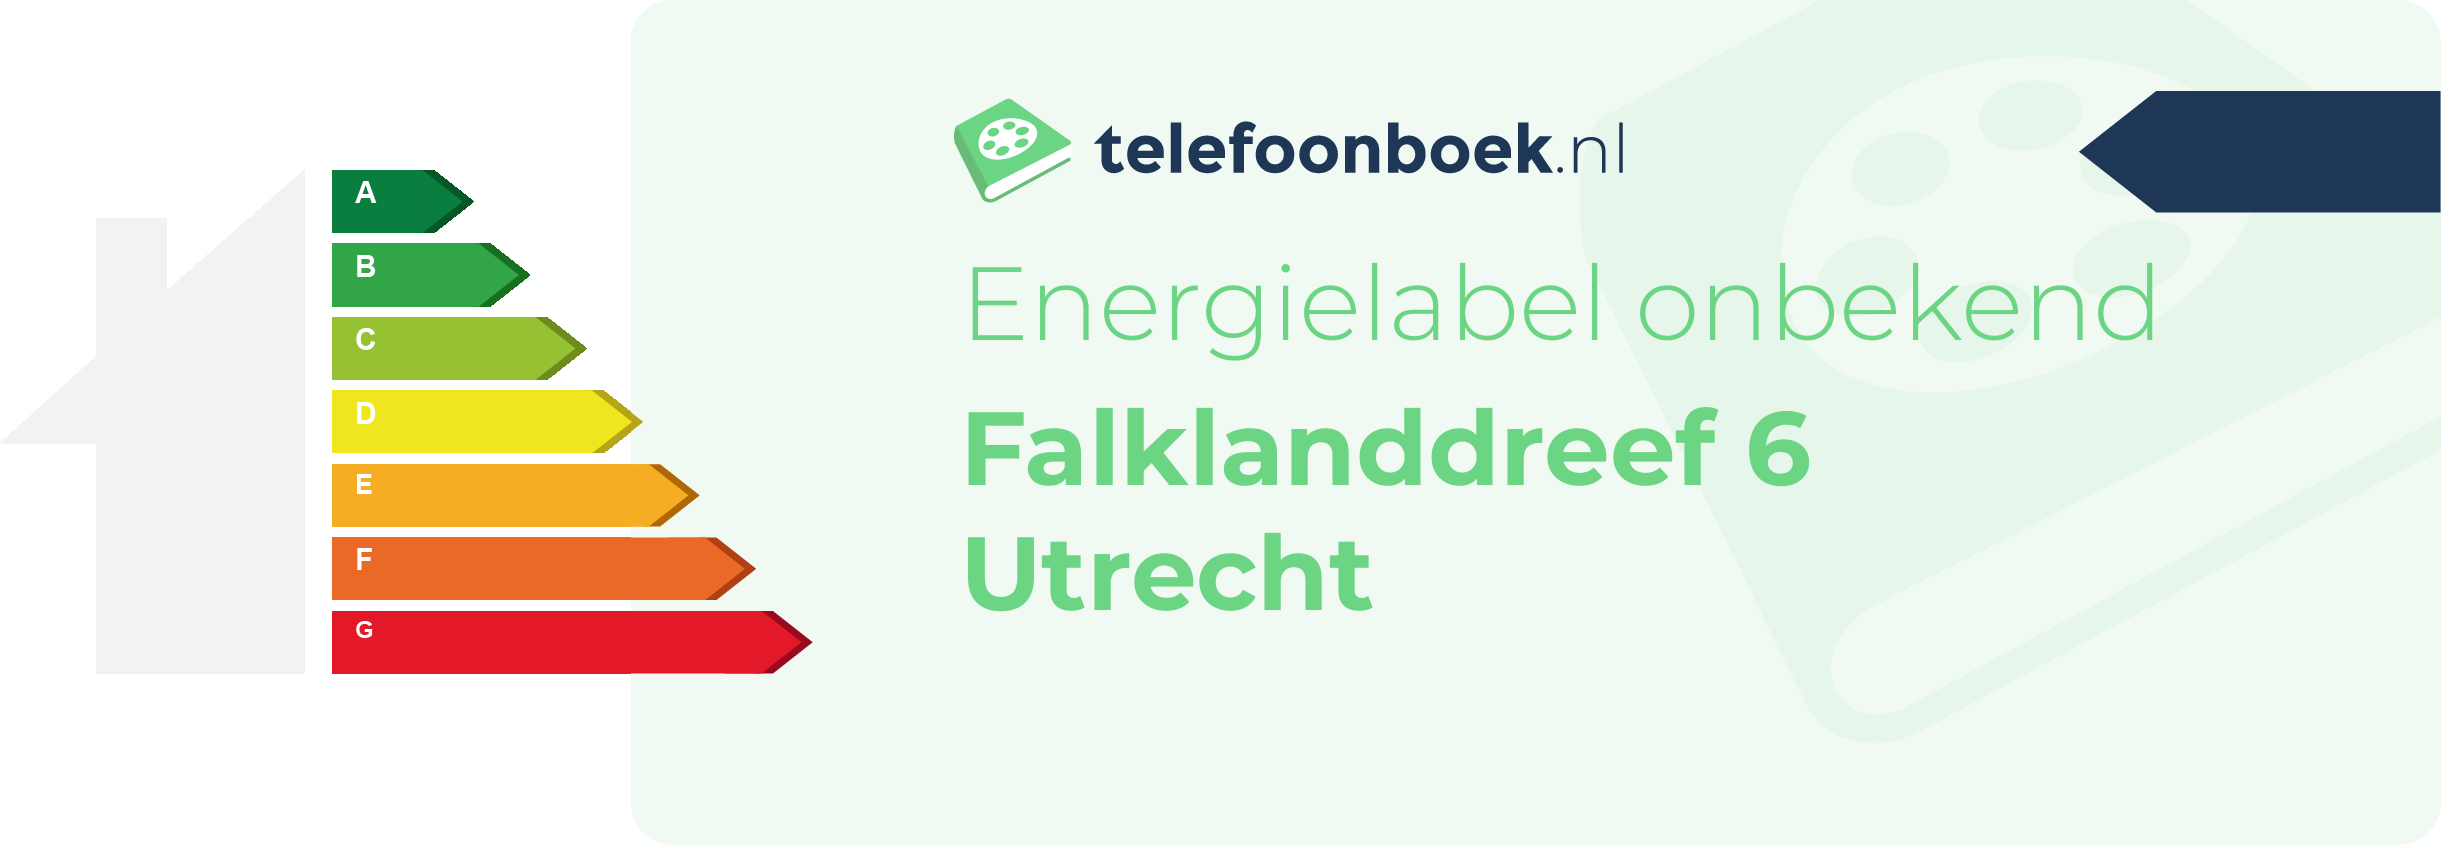 Energielabel Falklanddreef 6 Utrecht